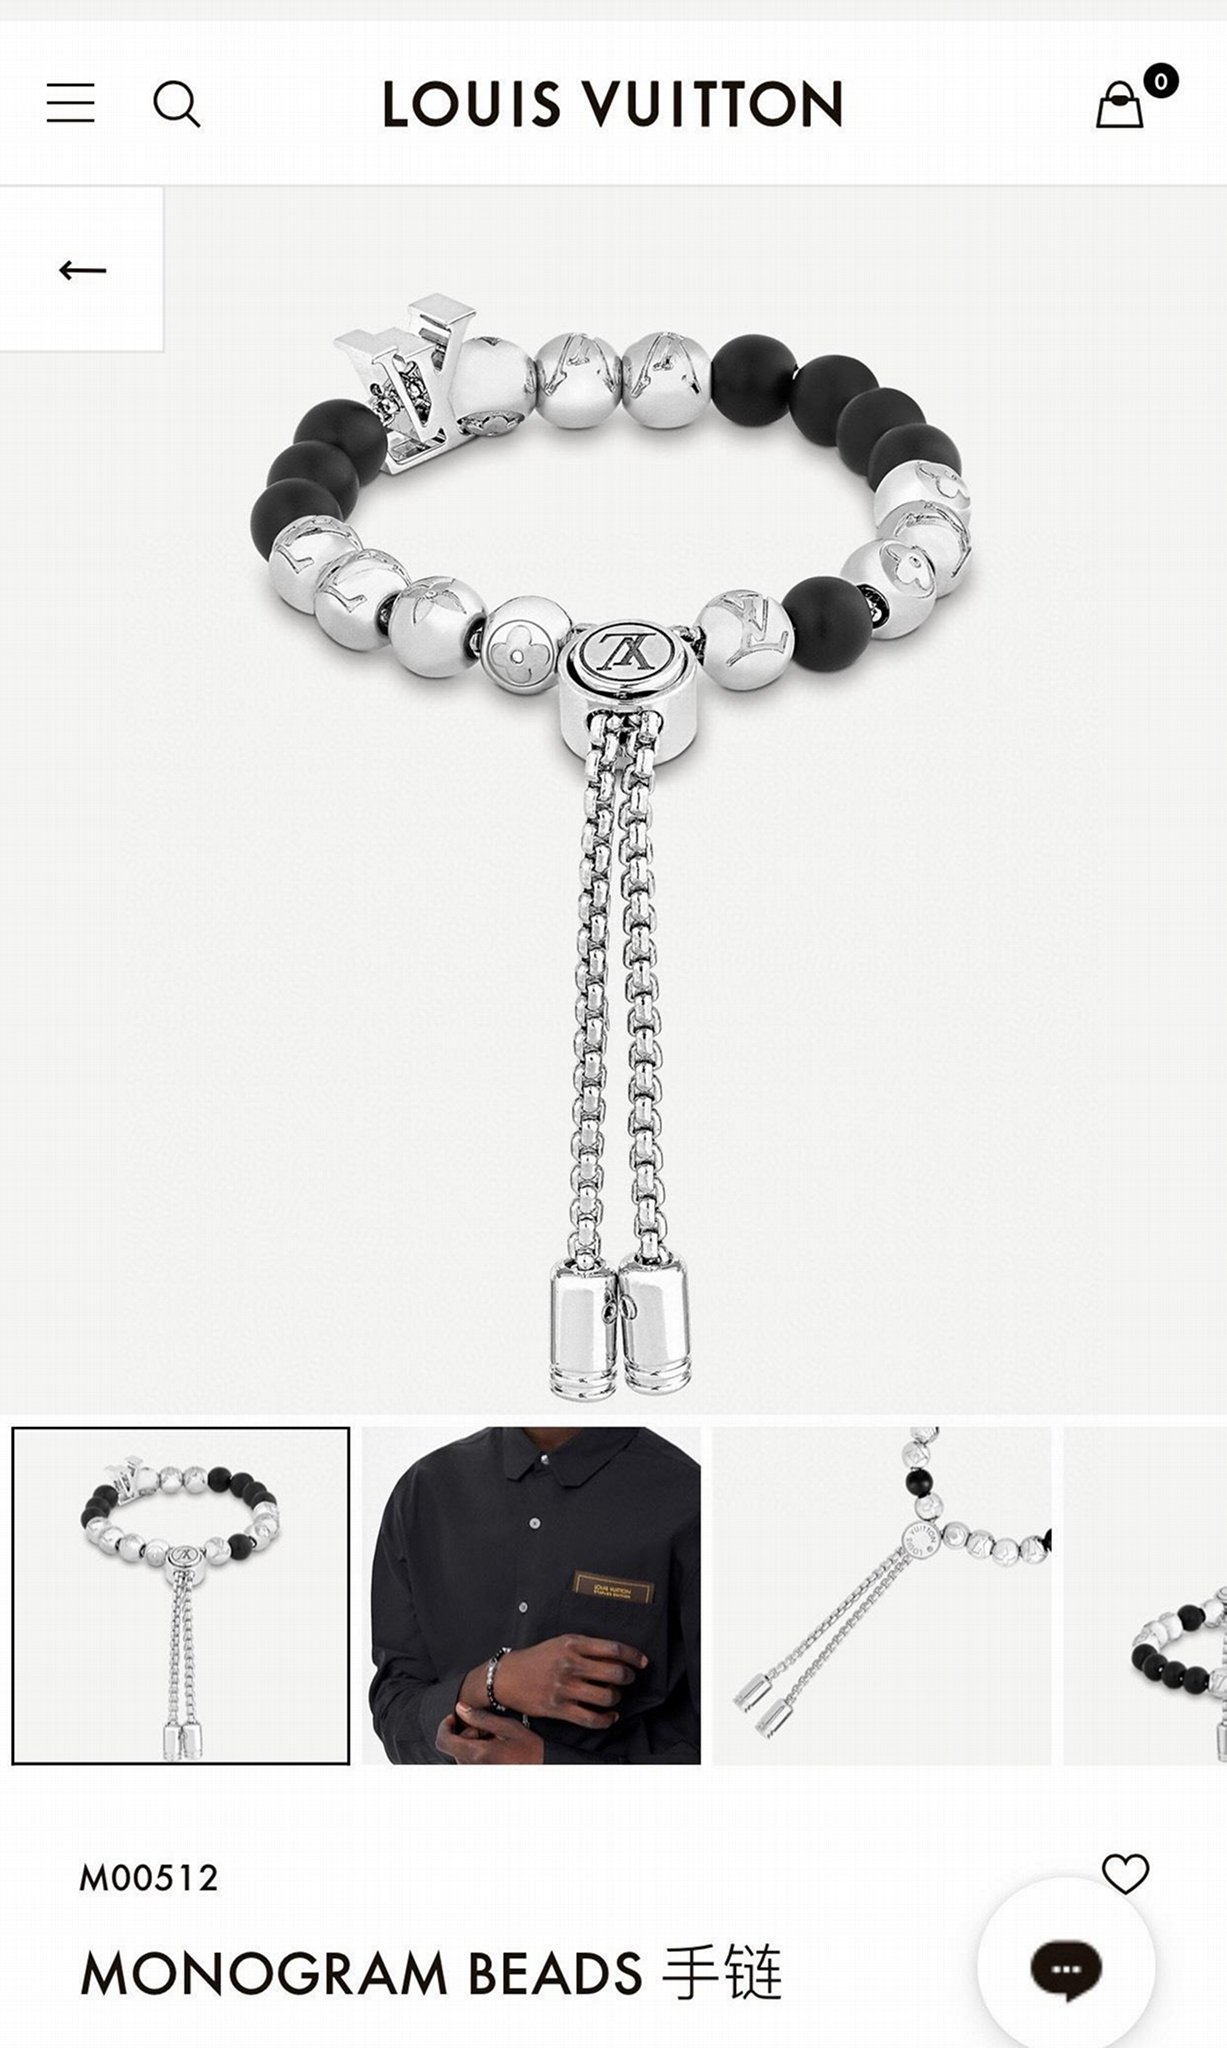 Hot Monogram Beads       and Chain fashion key fashion gift key Chain  Jewllery 5